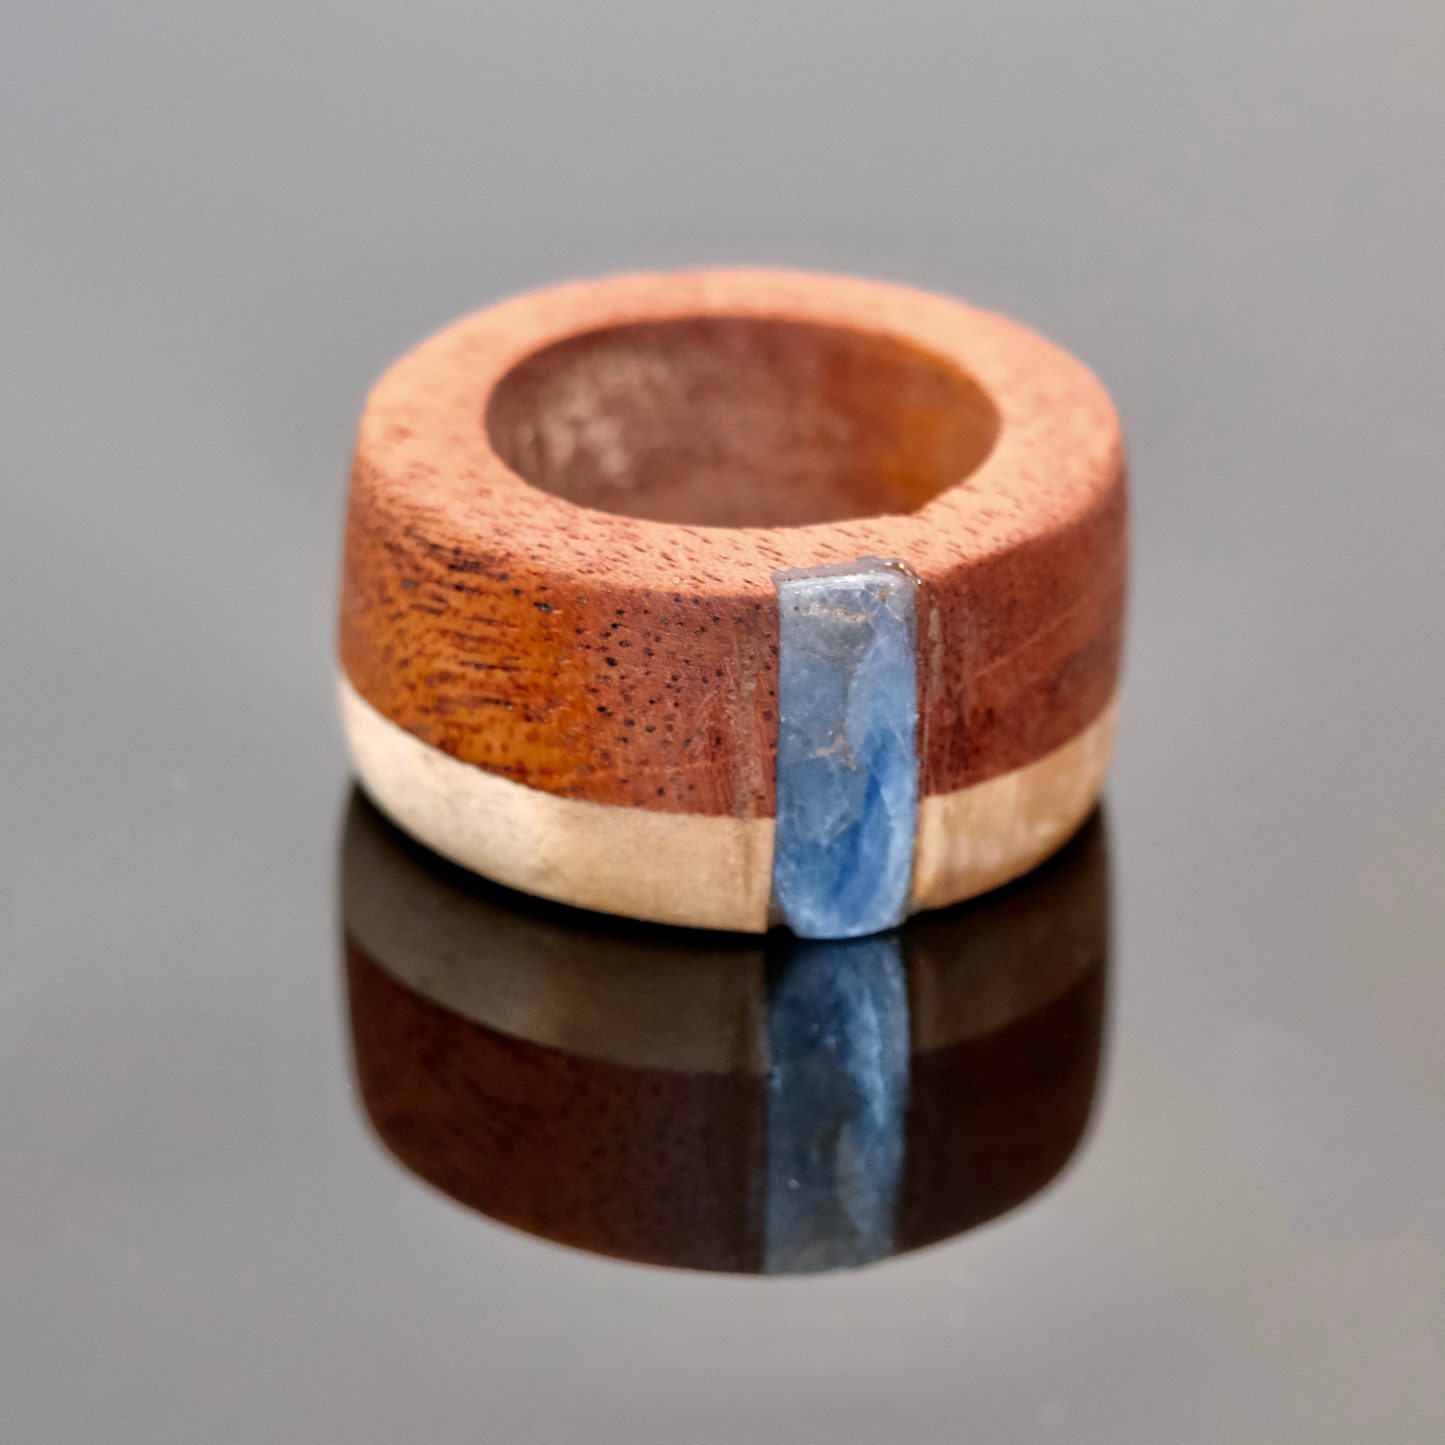 Seaside  - Quilted Honduran Mahogany and Japanese Plum Wood Ring by Nicholas Howlett